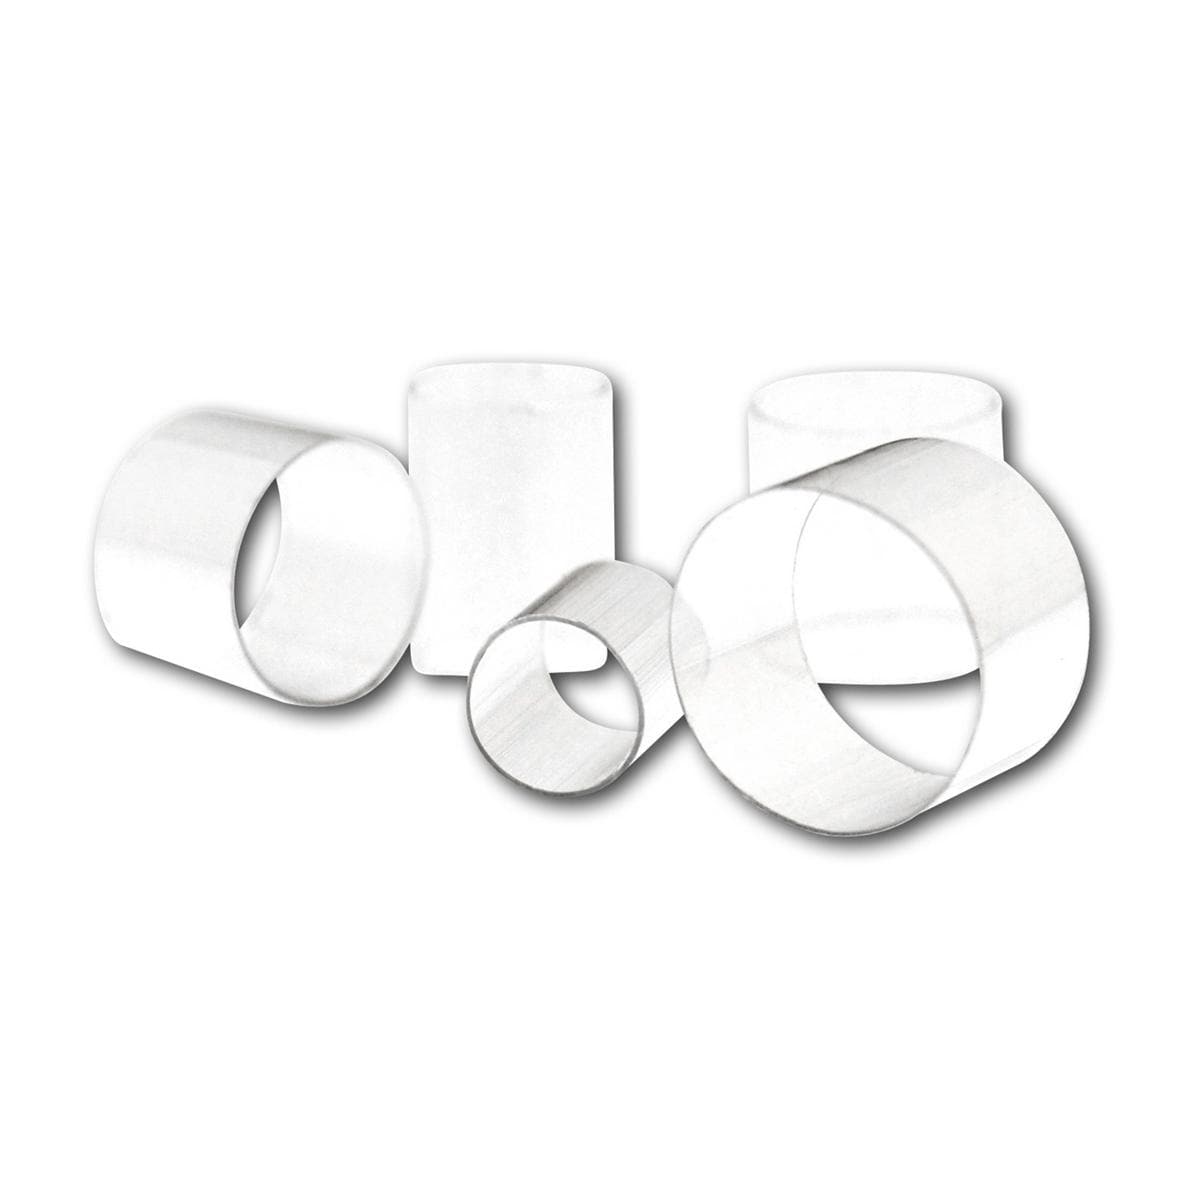 Transparent Ringe - Nachfüllpackung - Nr. 19, Packung 12 Stück